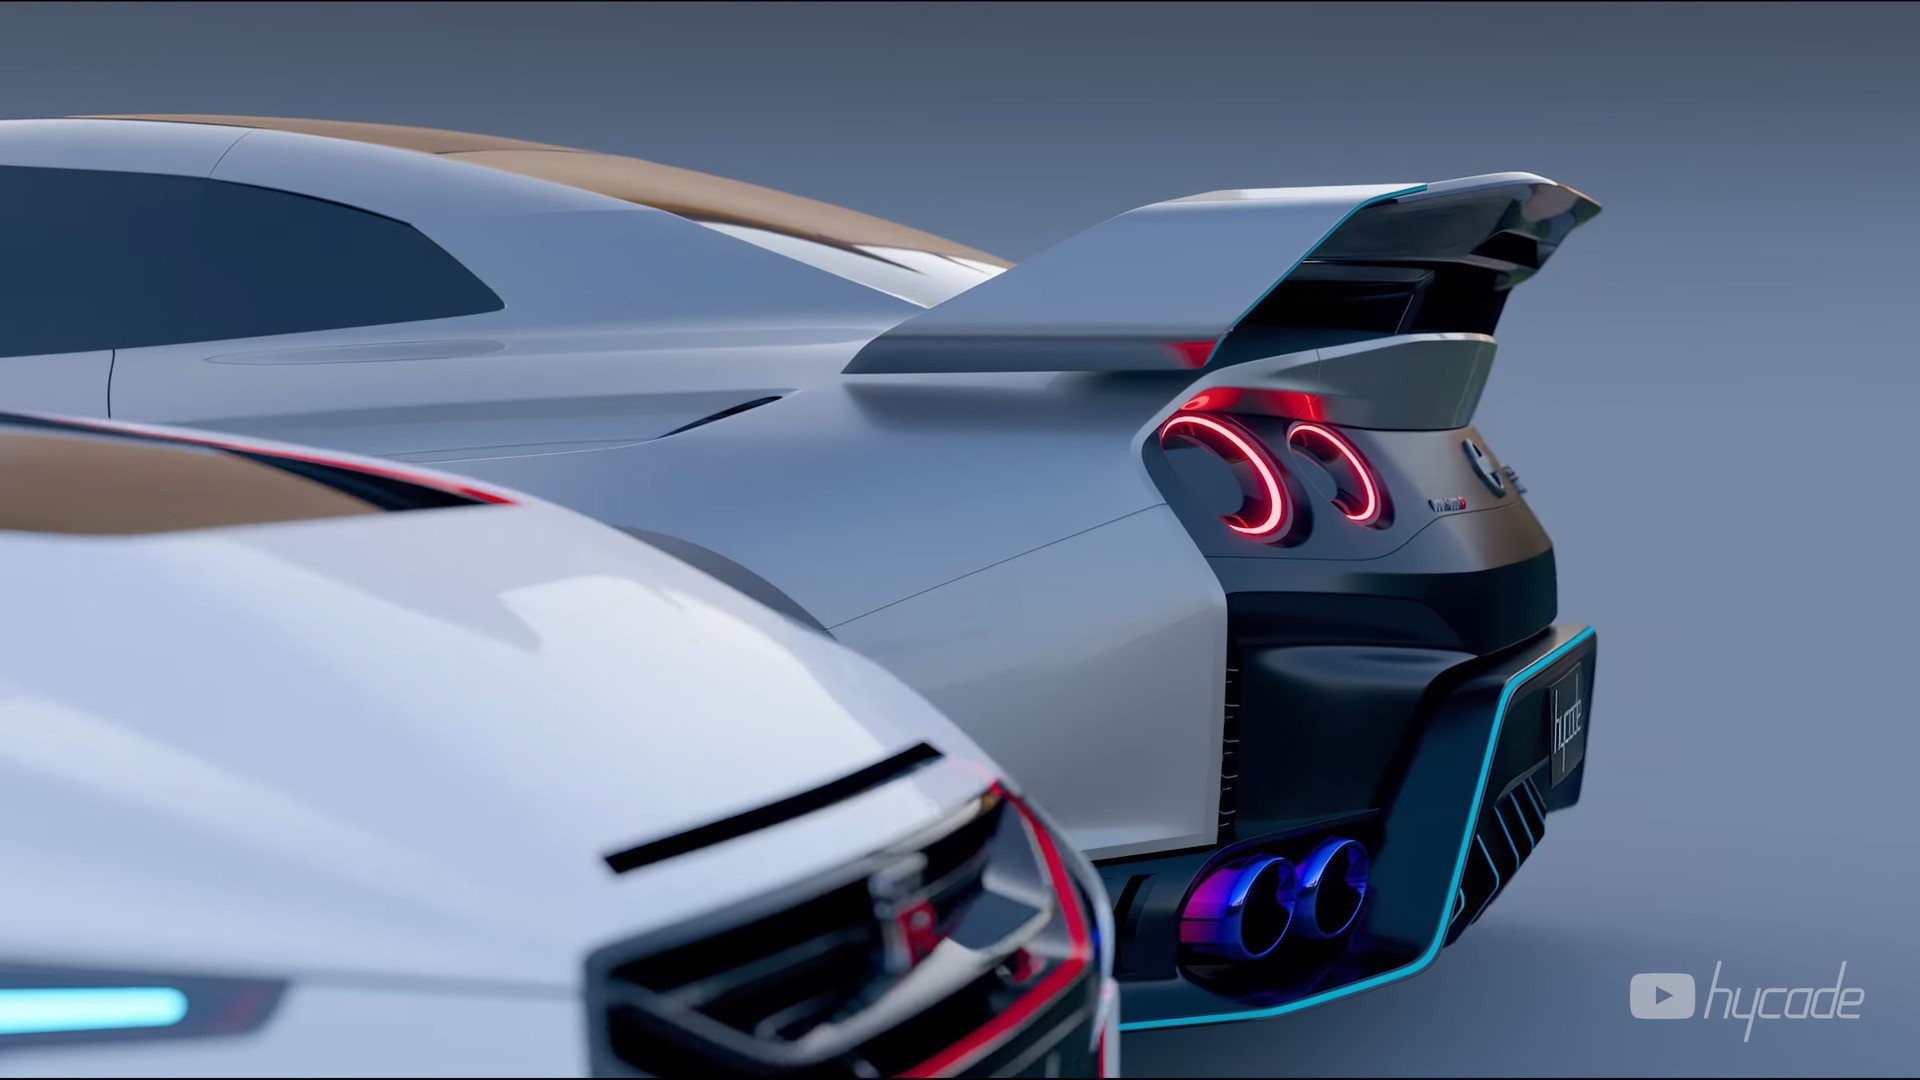 Autoass Media on X: Nissan R36 Skyline GT-R Nismo Render https